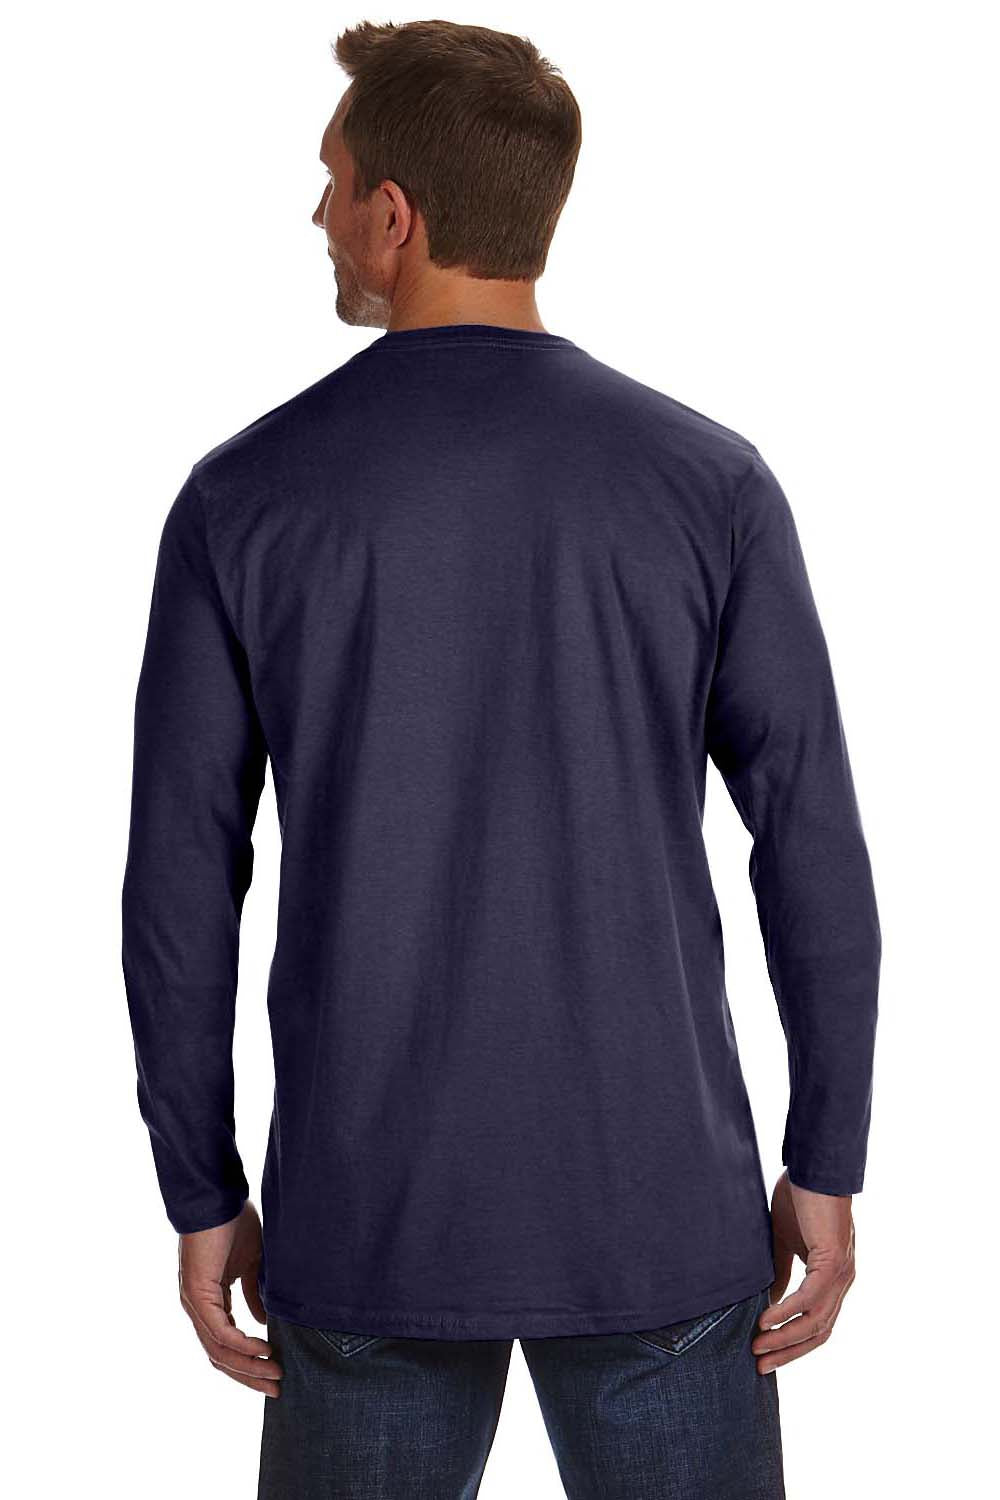 Hanes 498L Mens Nano-T Long Sleeve Crewneck T-Shirt Navy Blue Back